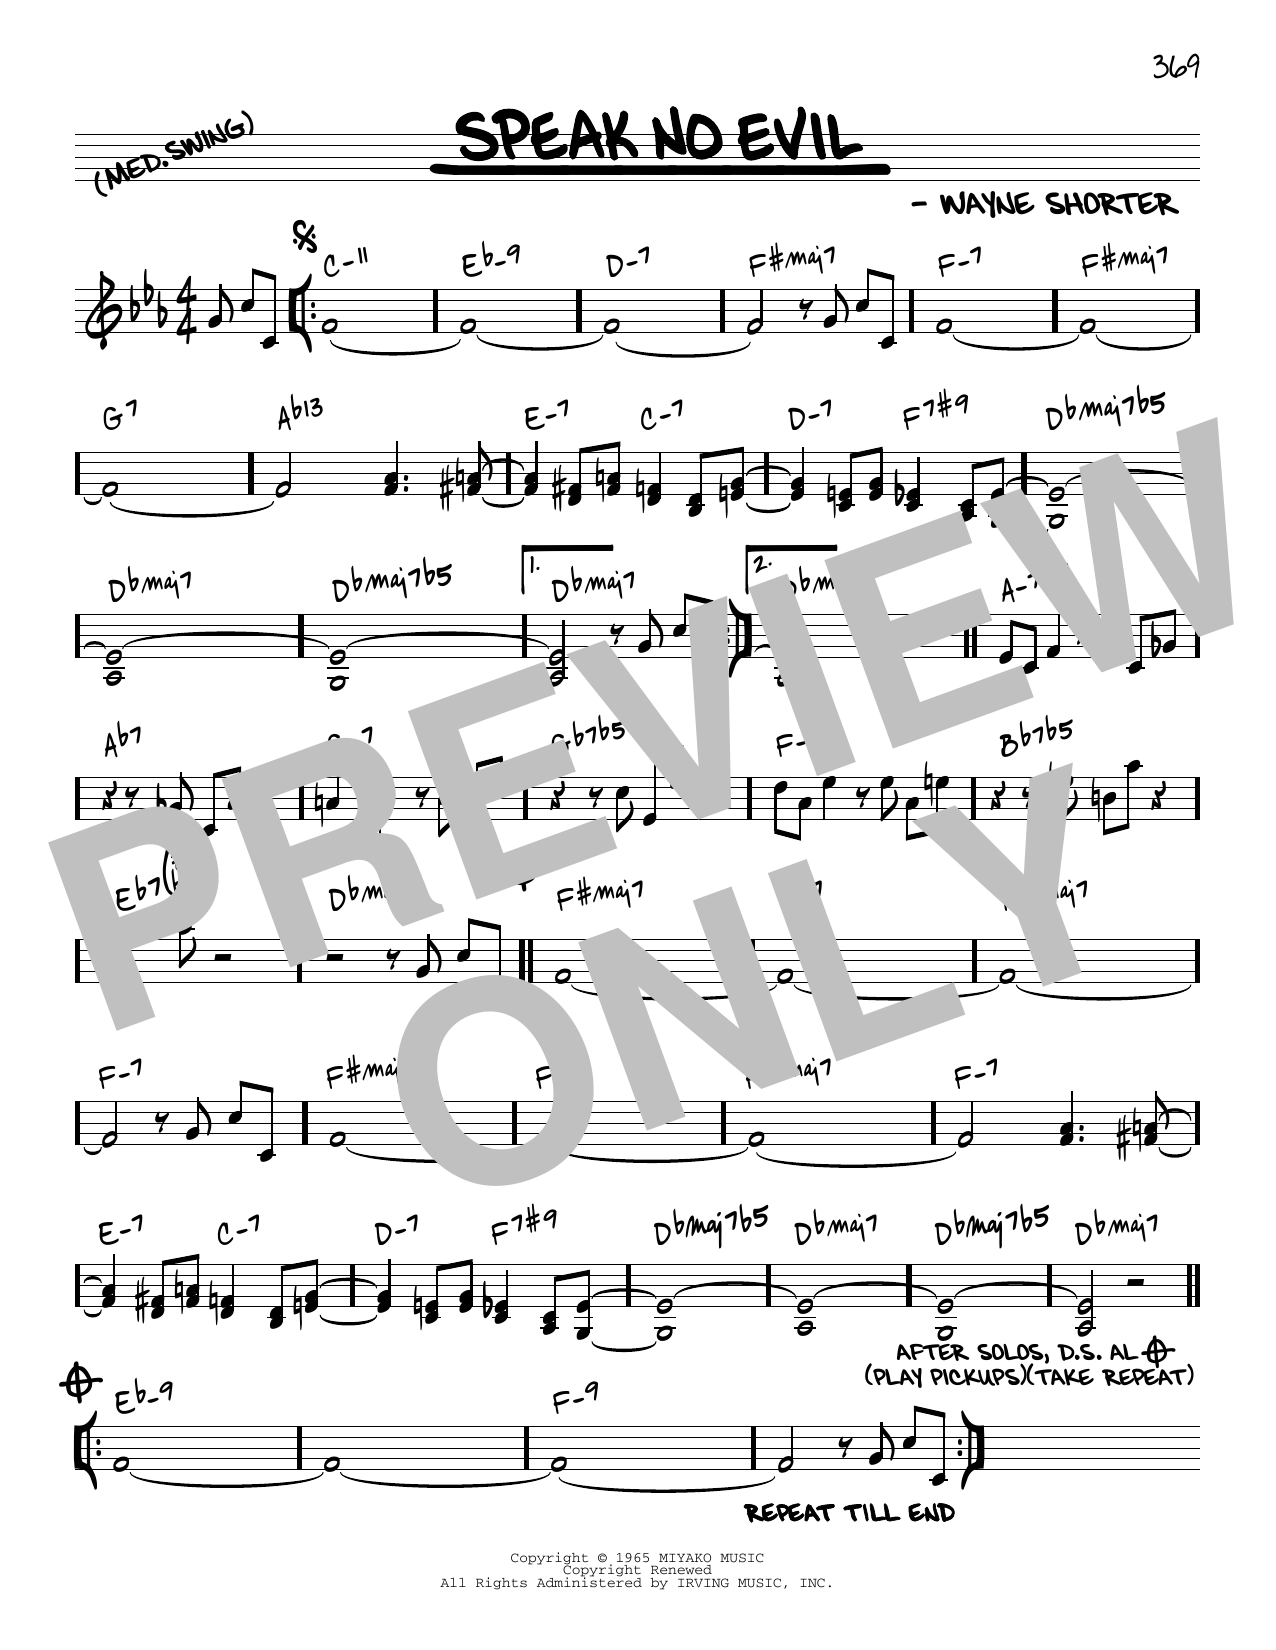 Wayne Shorter Speak No Evil [Reharmonized version] (arr. Jack Grassel) Sheet Music Notes & Chords for Real Book – Melody & Chords - Download or Print PDF